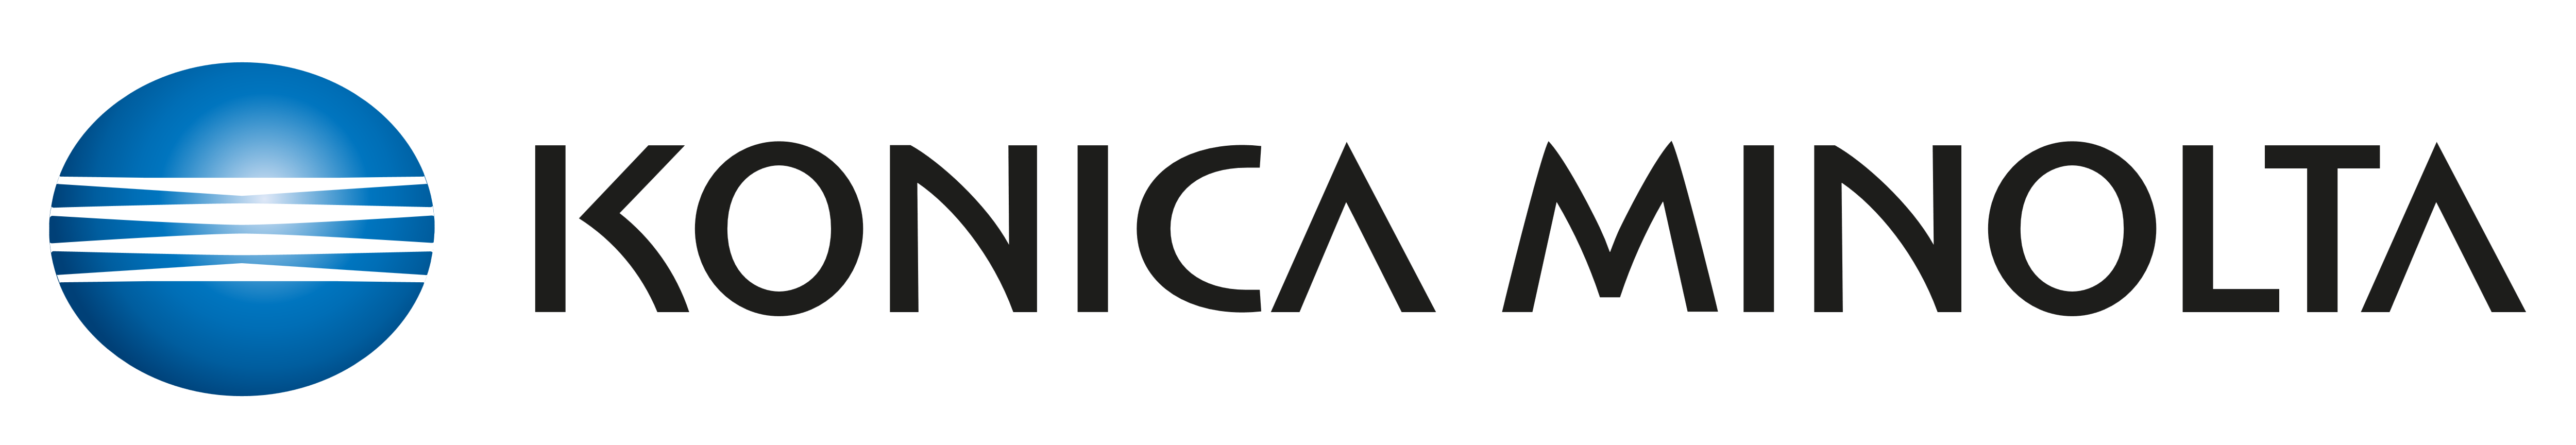 Konica Minolta – Logos Download